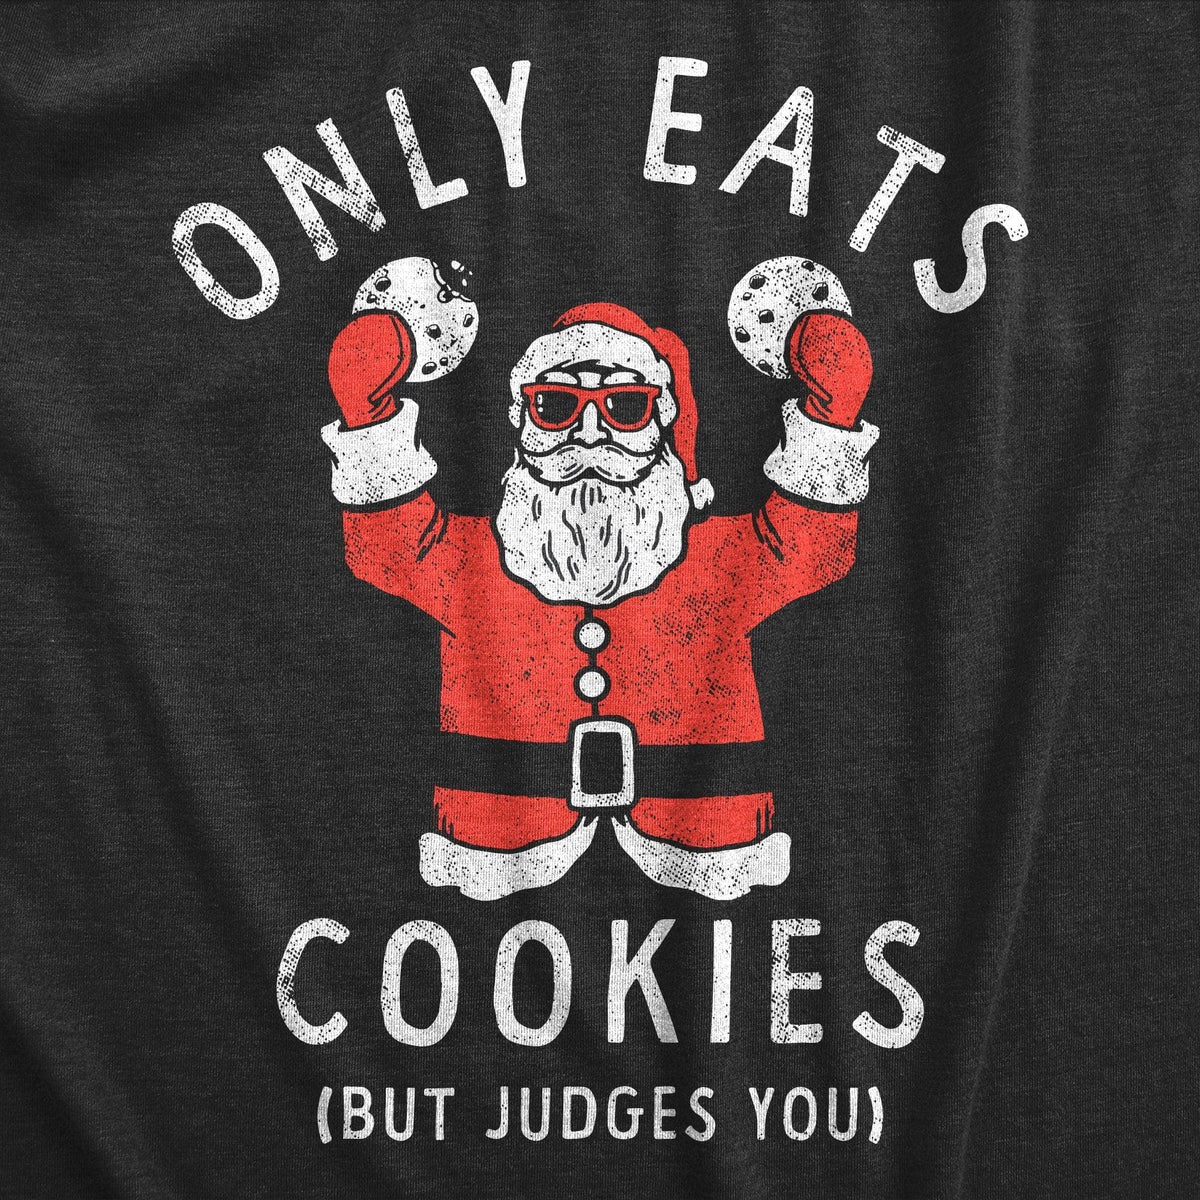 Only Eats Cookies But Judges You Men&#39;s Tshirt  -  Crazy Dog T-Shirts